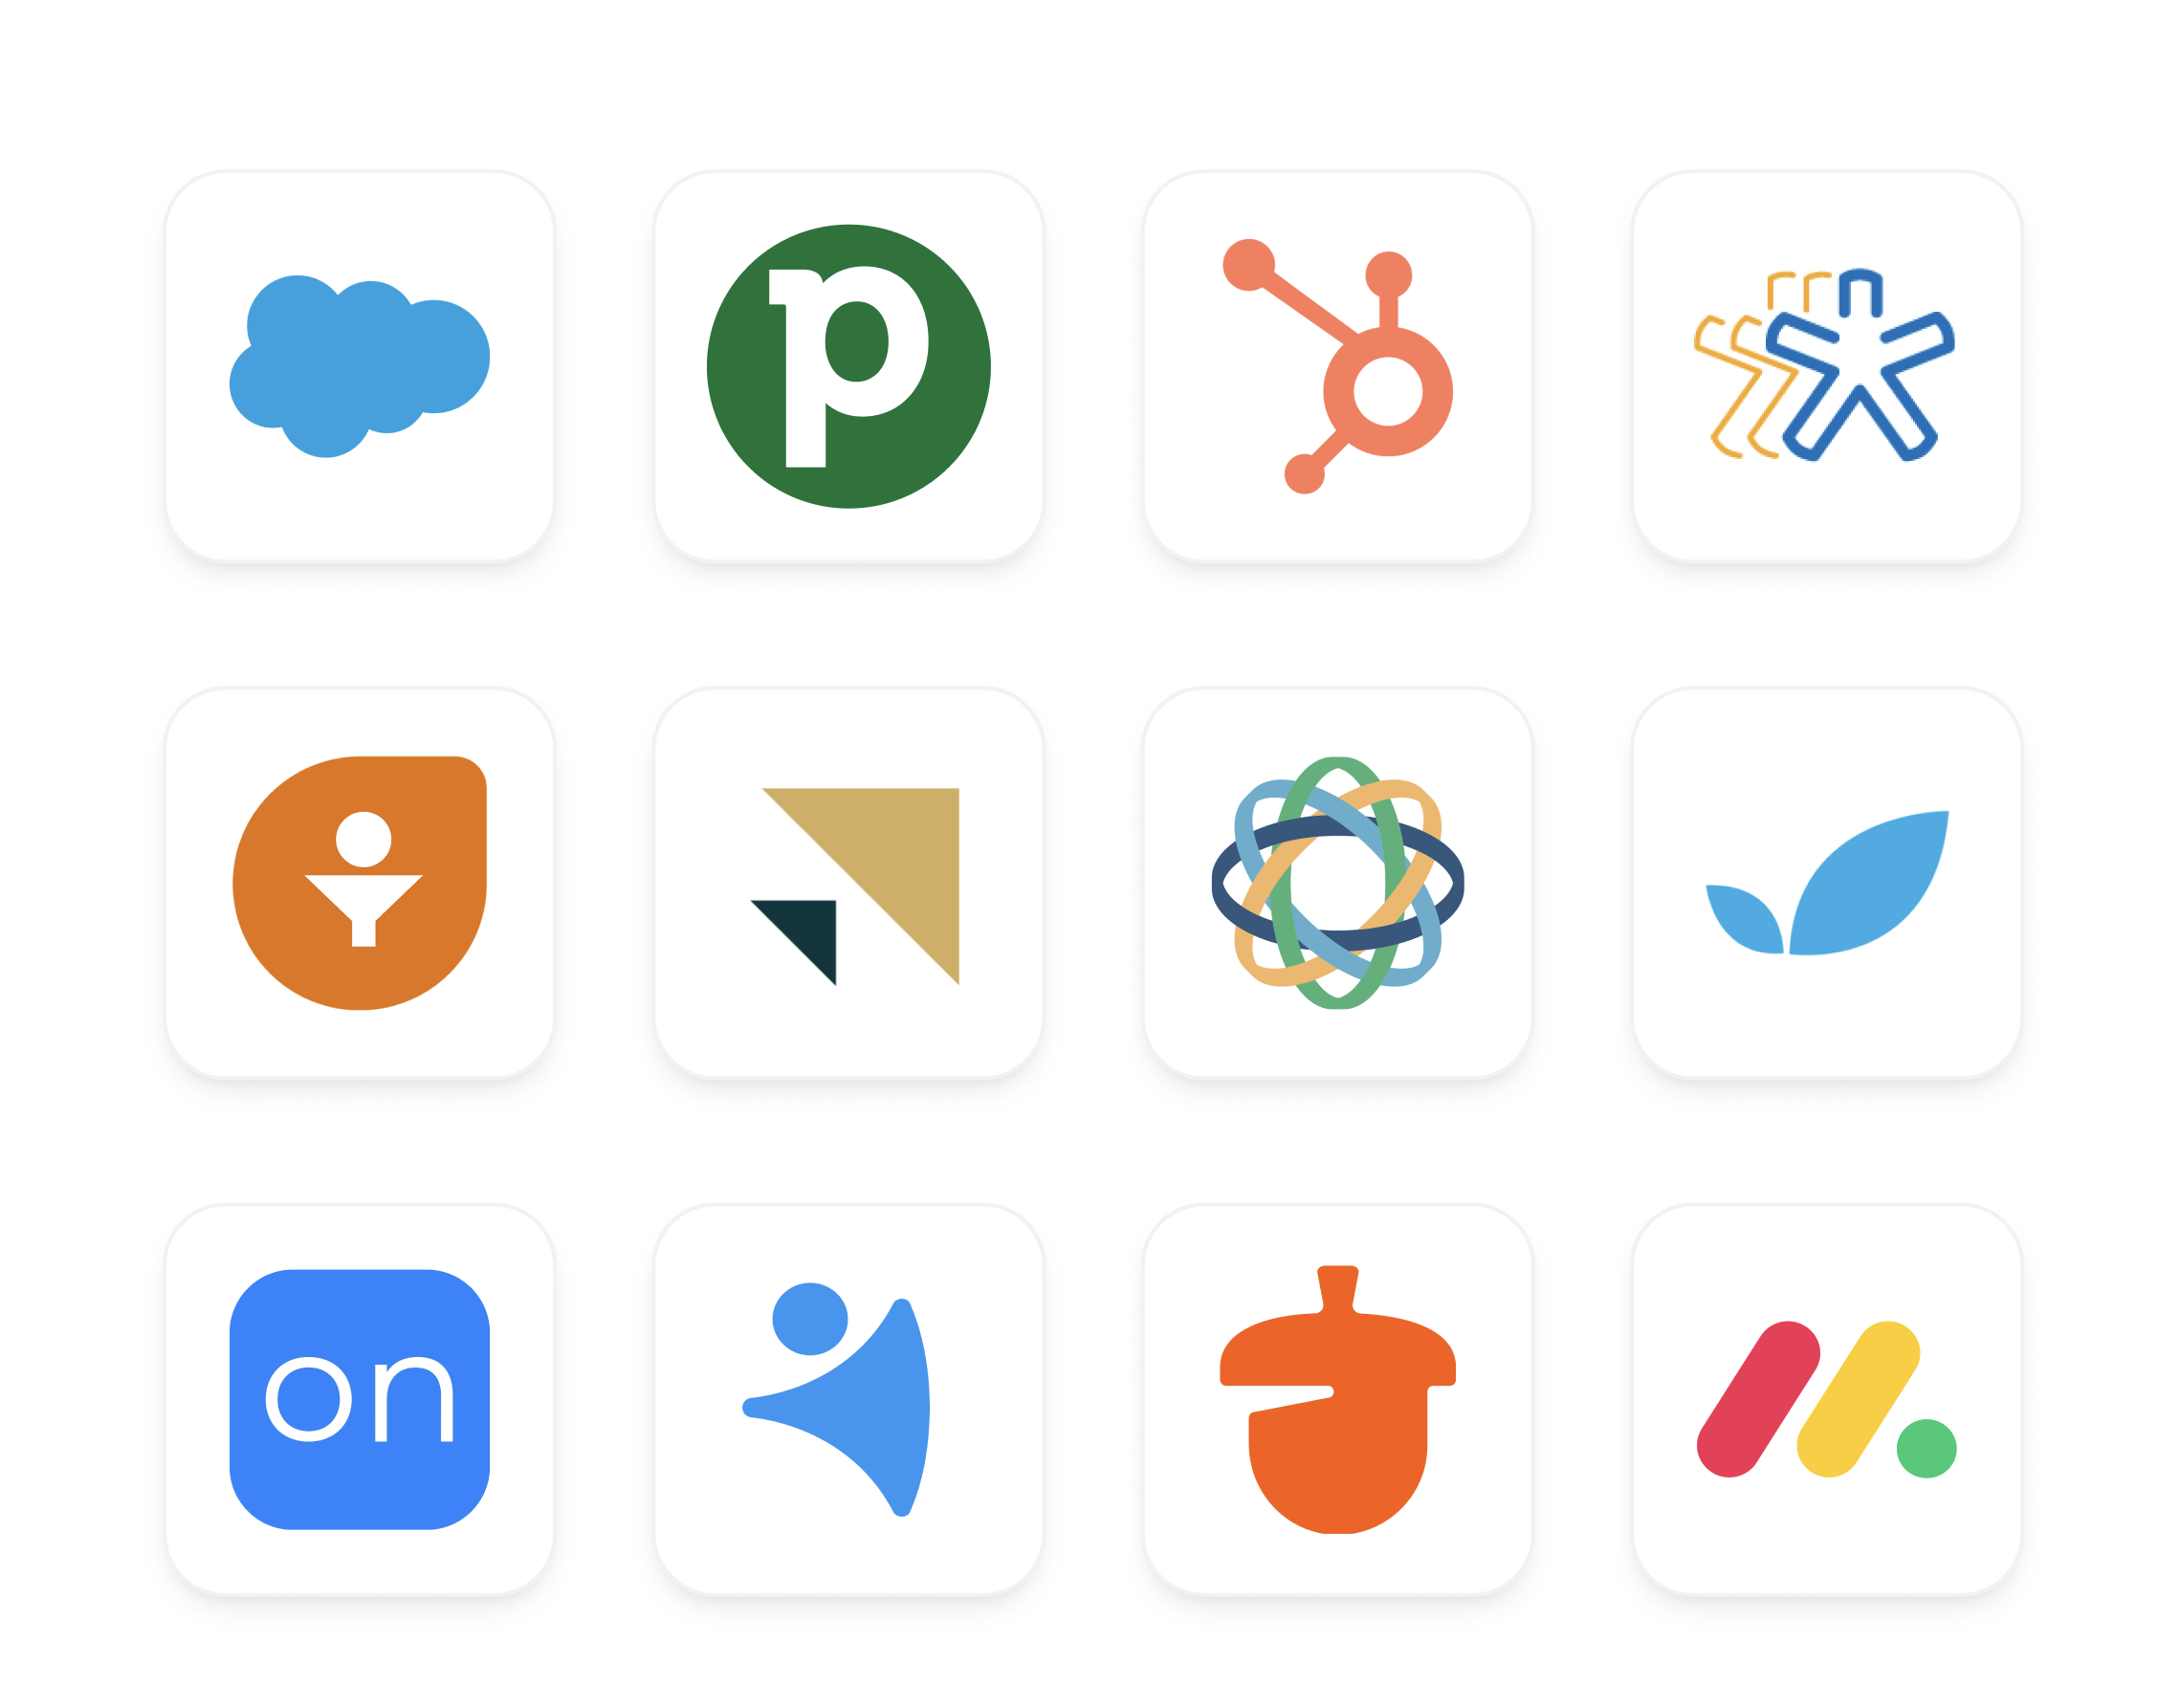 Grid of icons representing popular CRM platforms